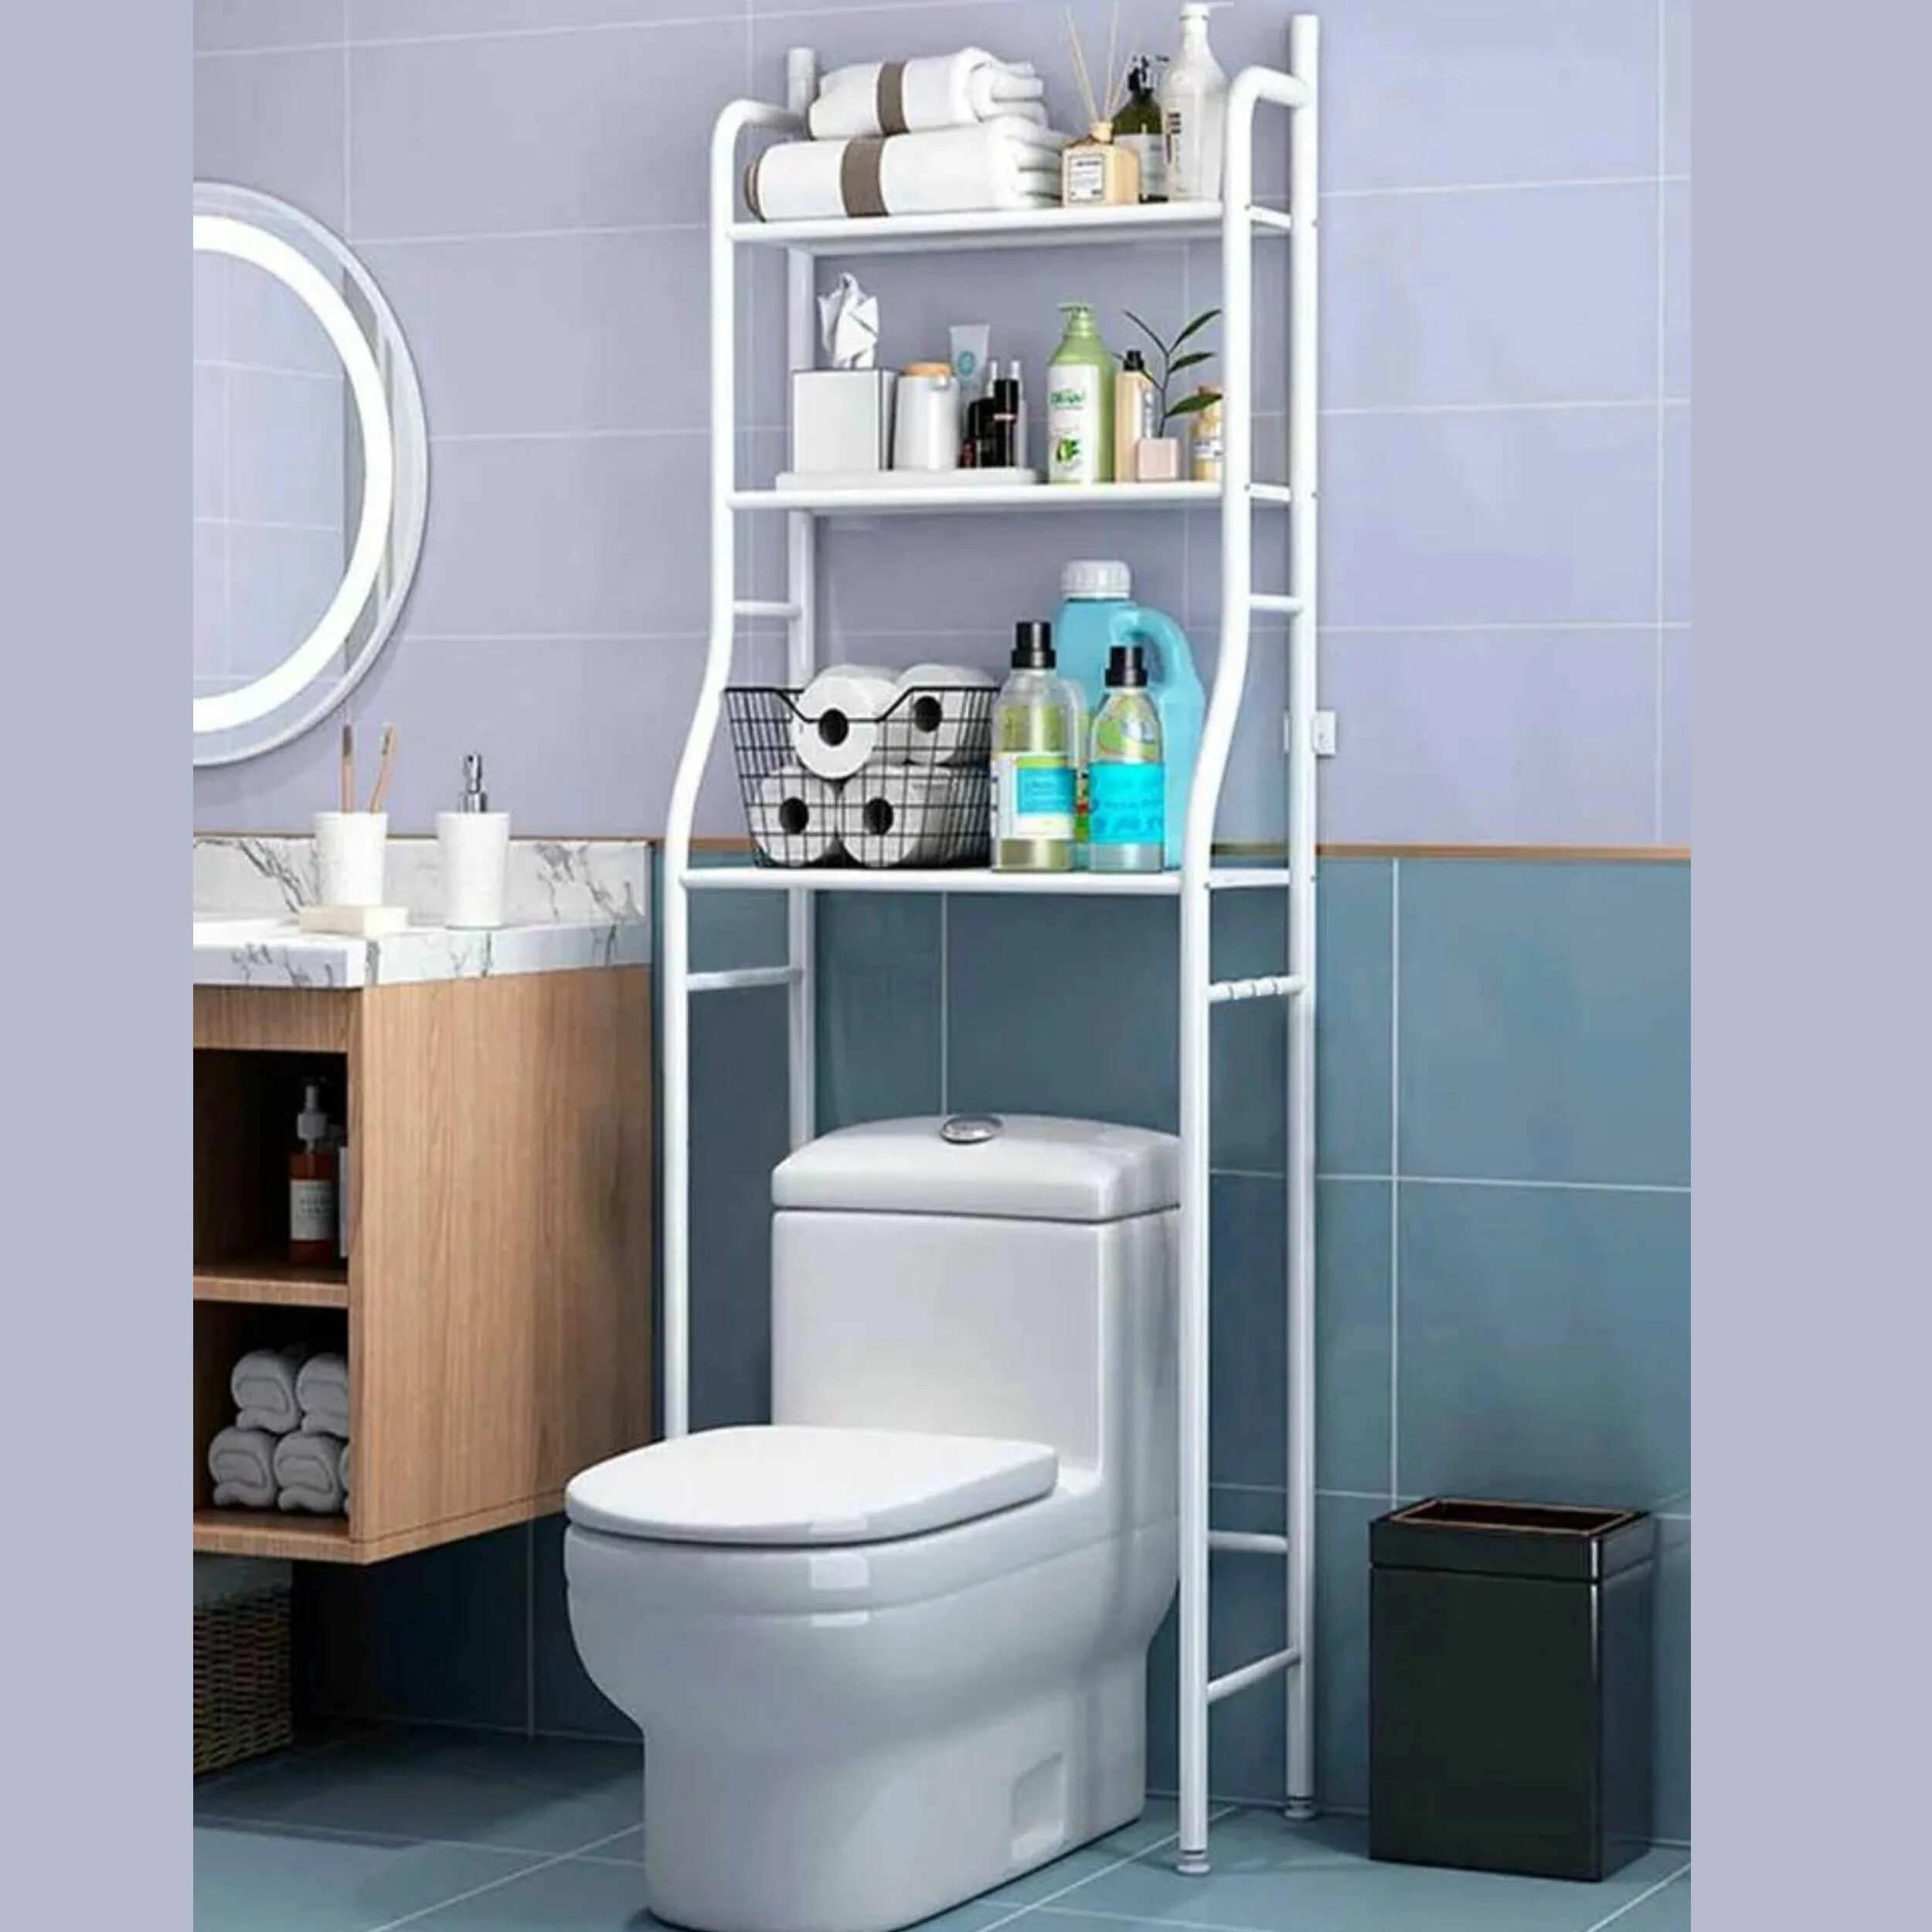 Стеллаж для ванной washing Machine Rack TM-011. Этажерка Toilet Rack, 50х25х160 см. Полка стеллаж для унитаза Toilet Rack. Стеллаж hw47883wh.